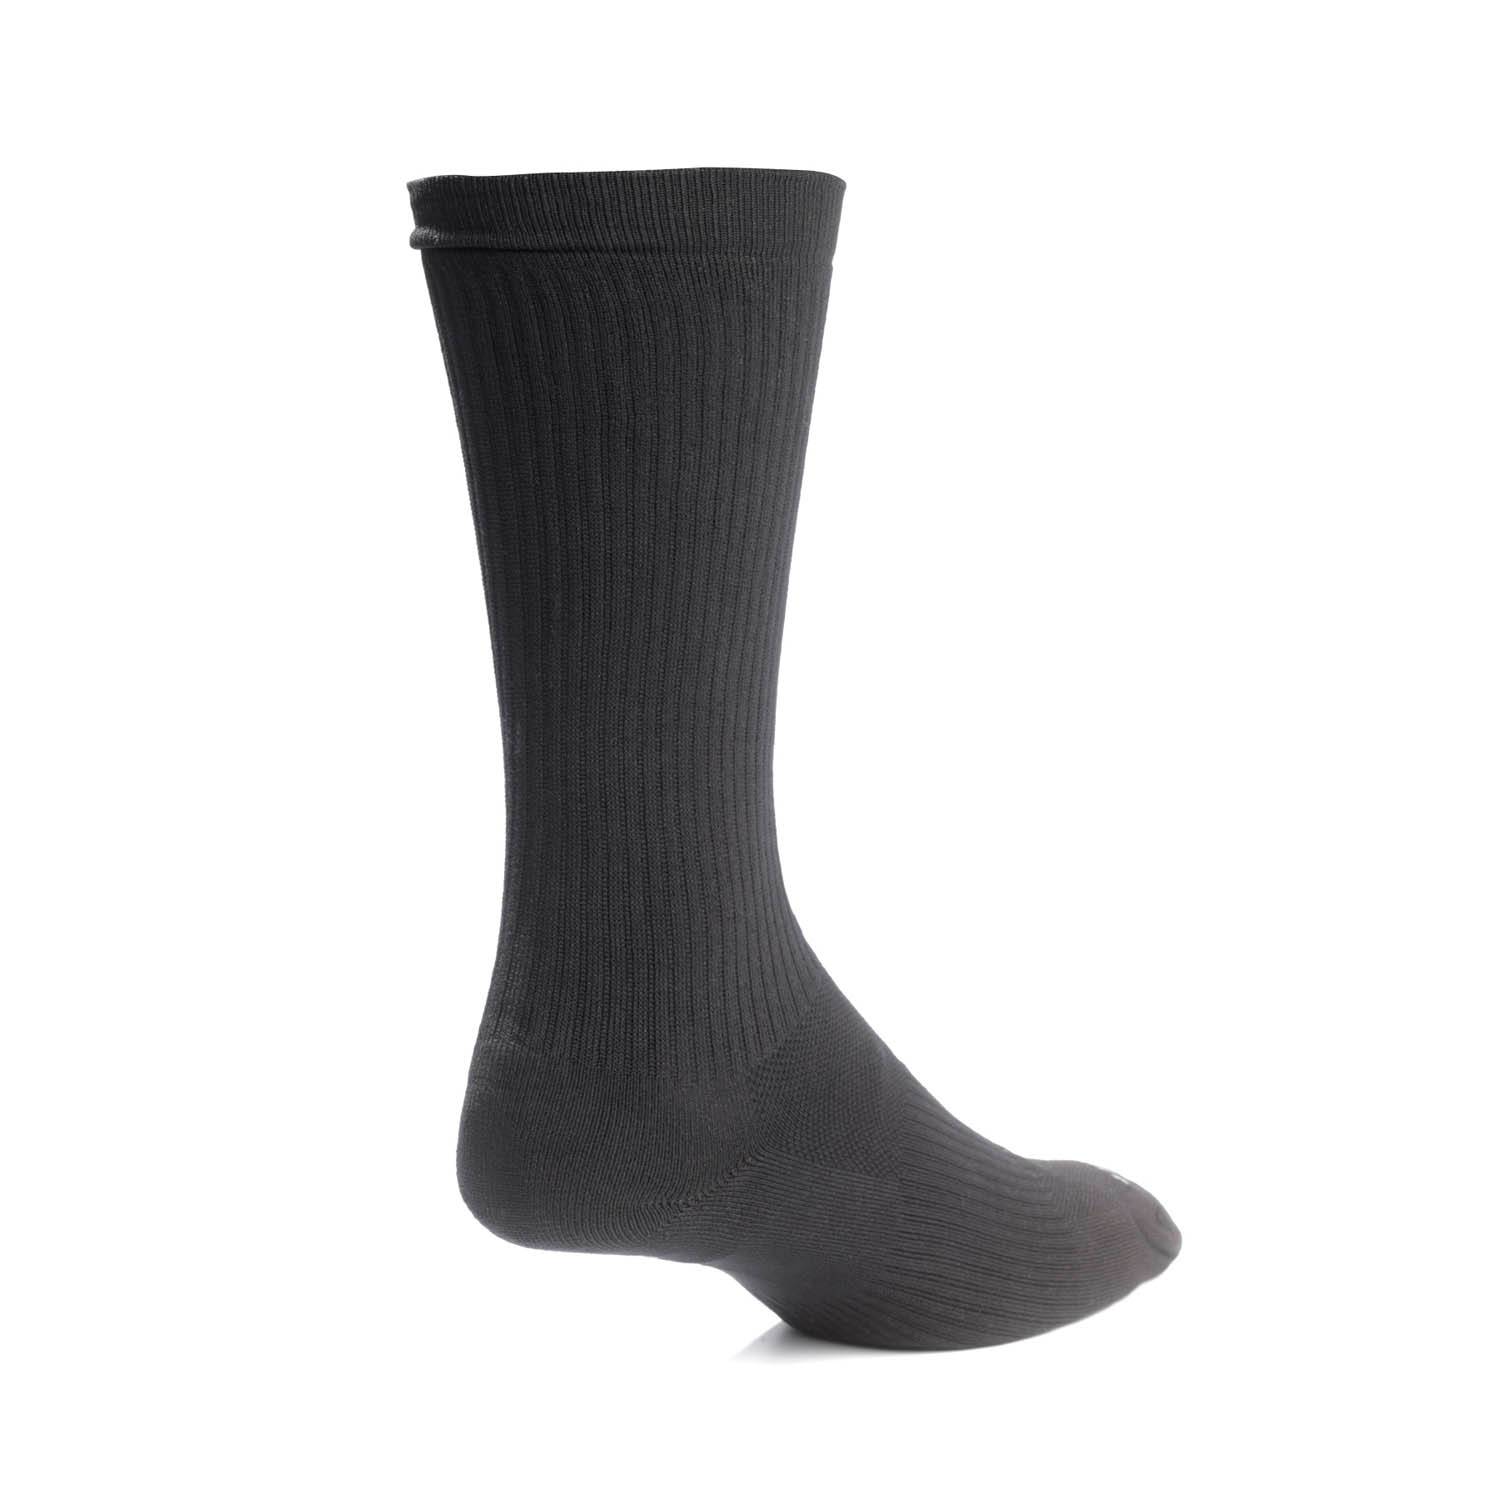 warm weather boot socks